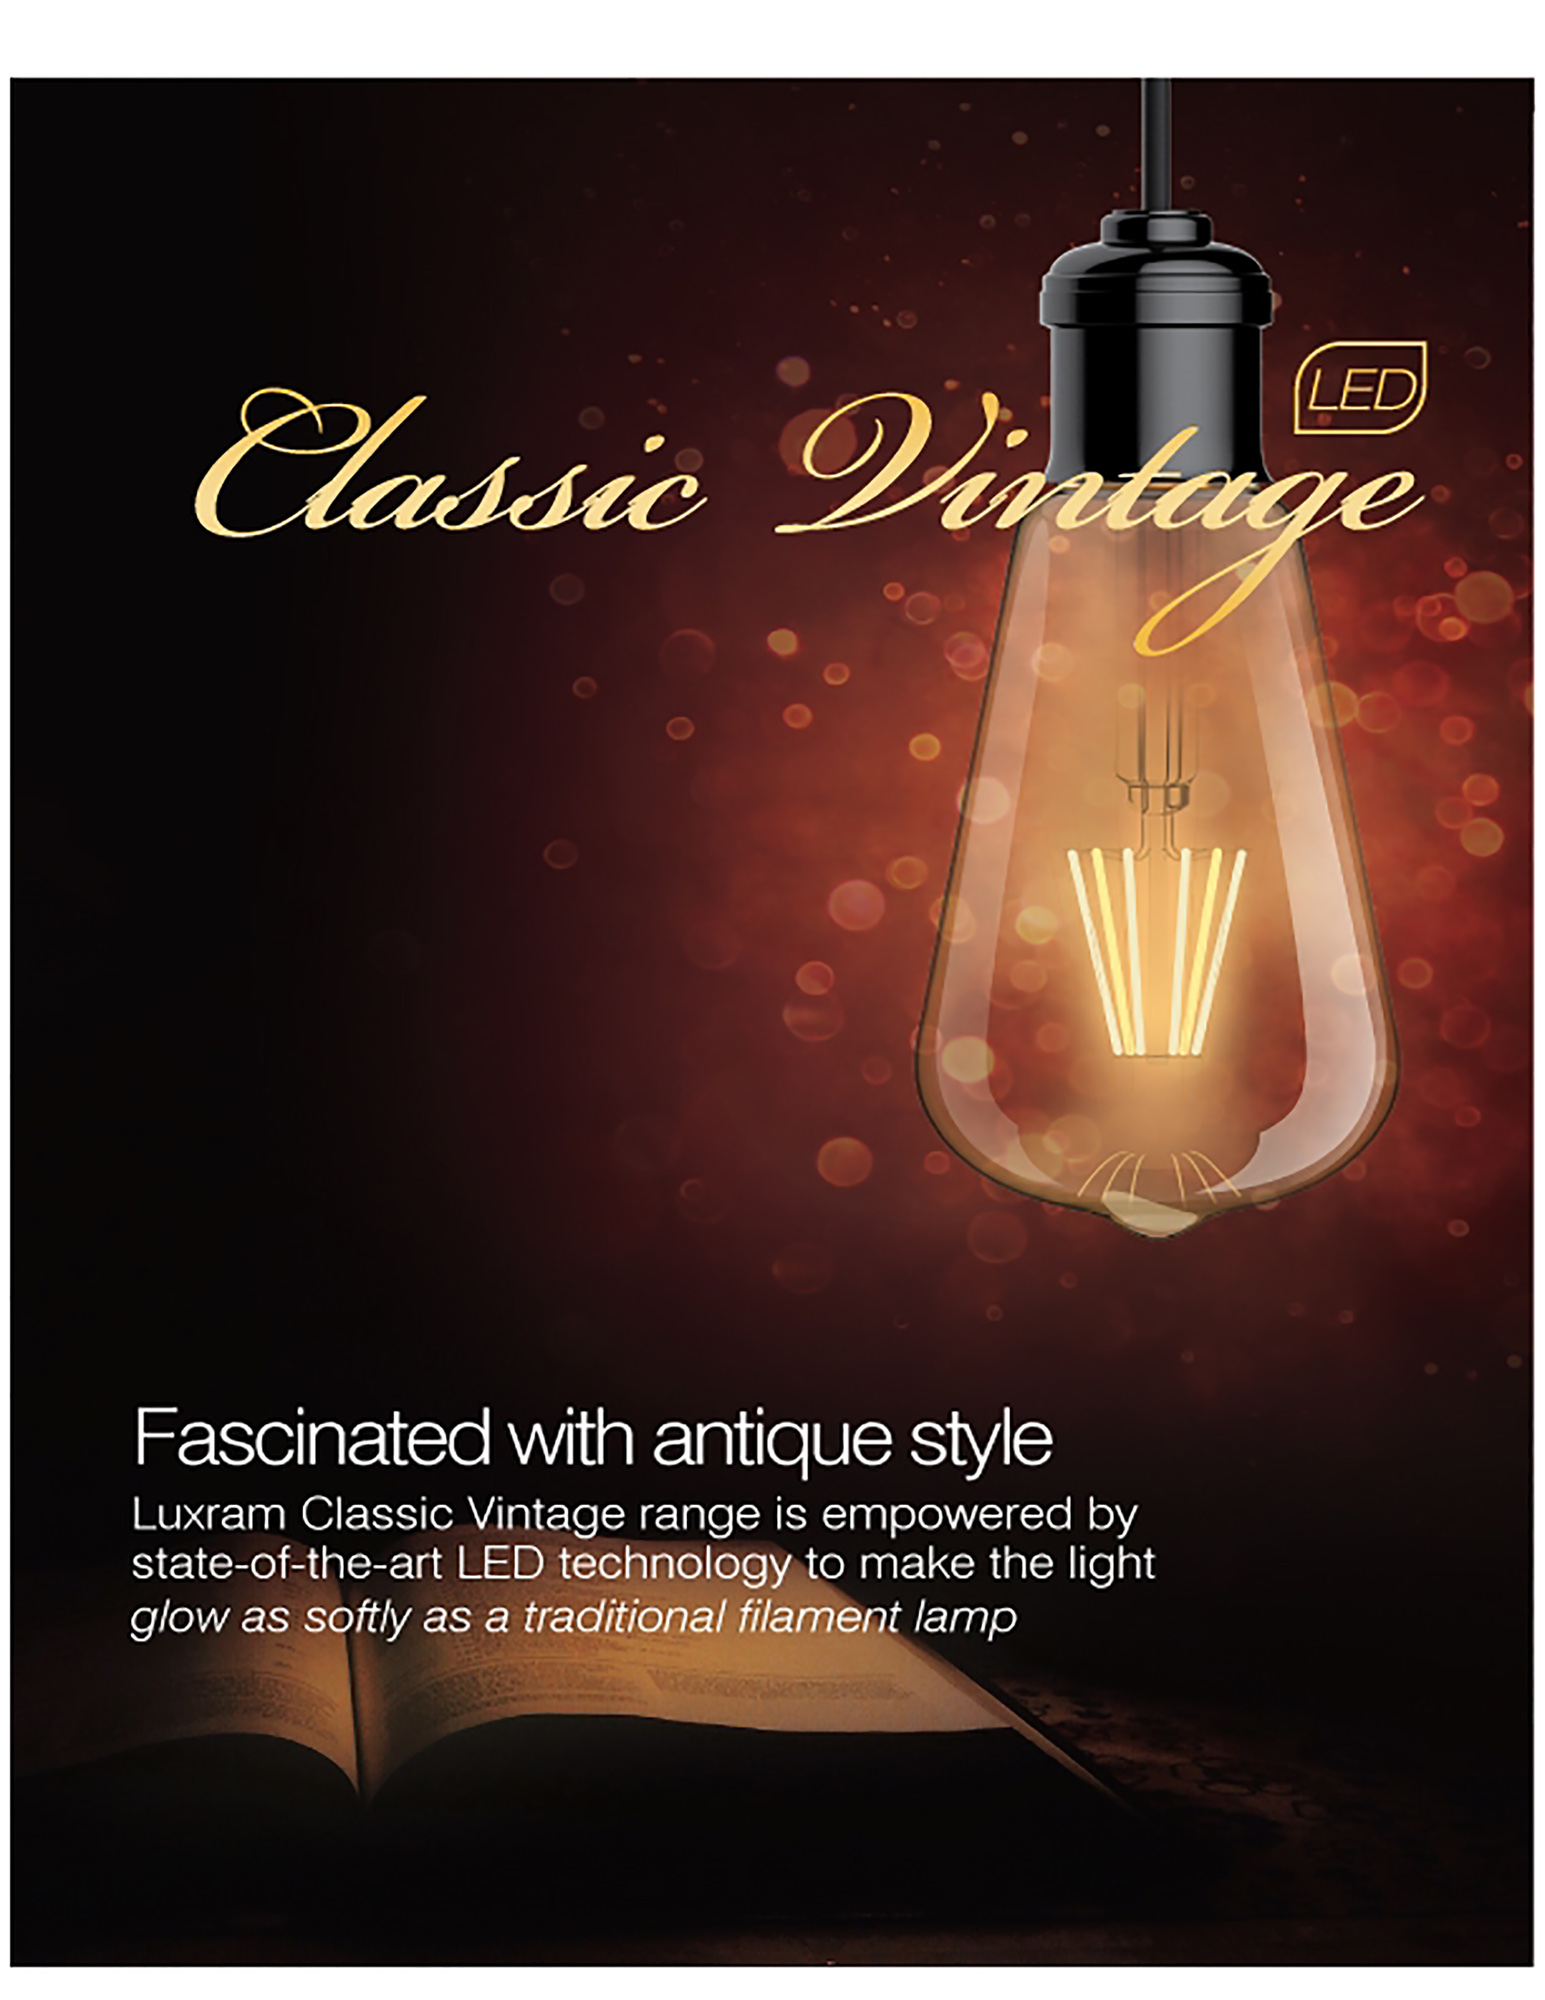 Value Vintage LED Lamps Luxram Vintage